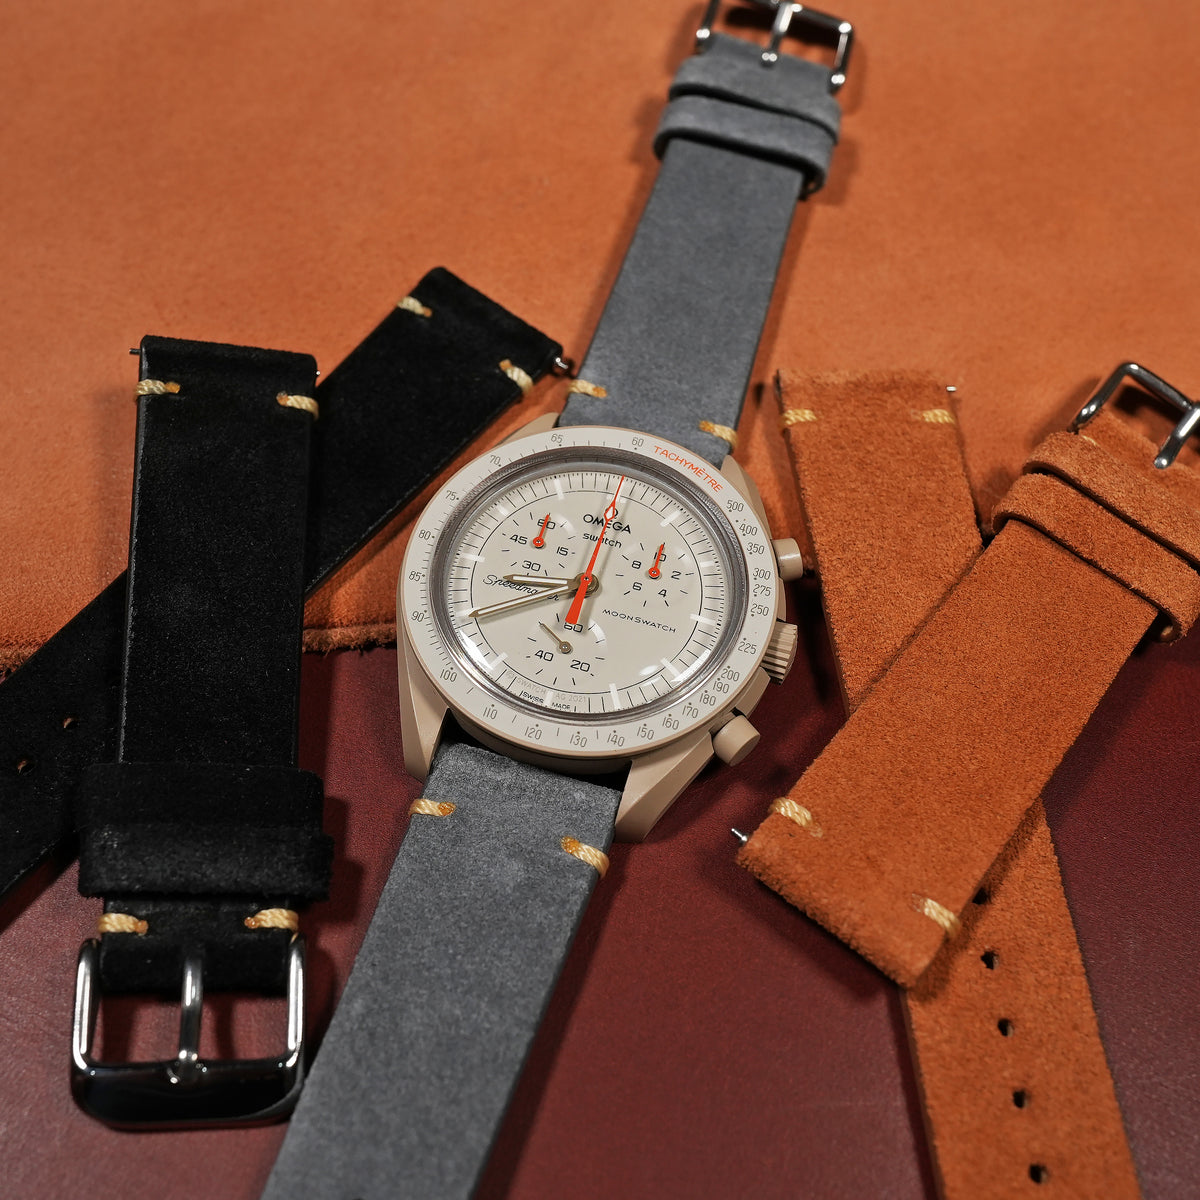 Premium Vintage Suede Leather Watch Strap in Grey - Nomad Watch Works SG